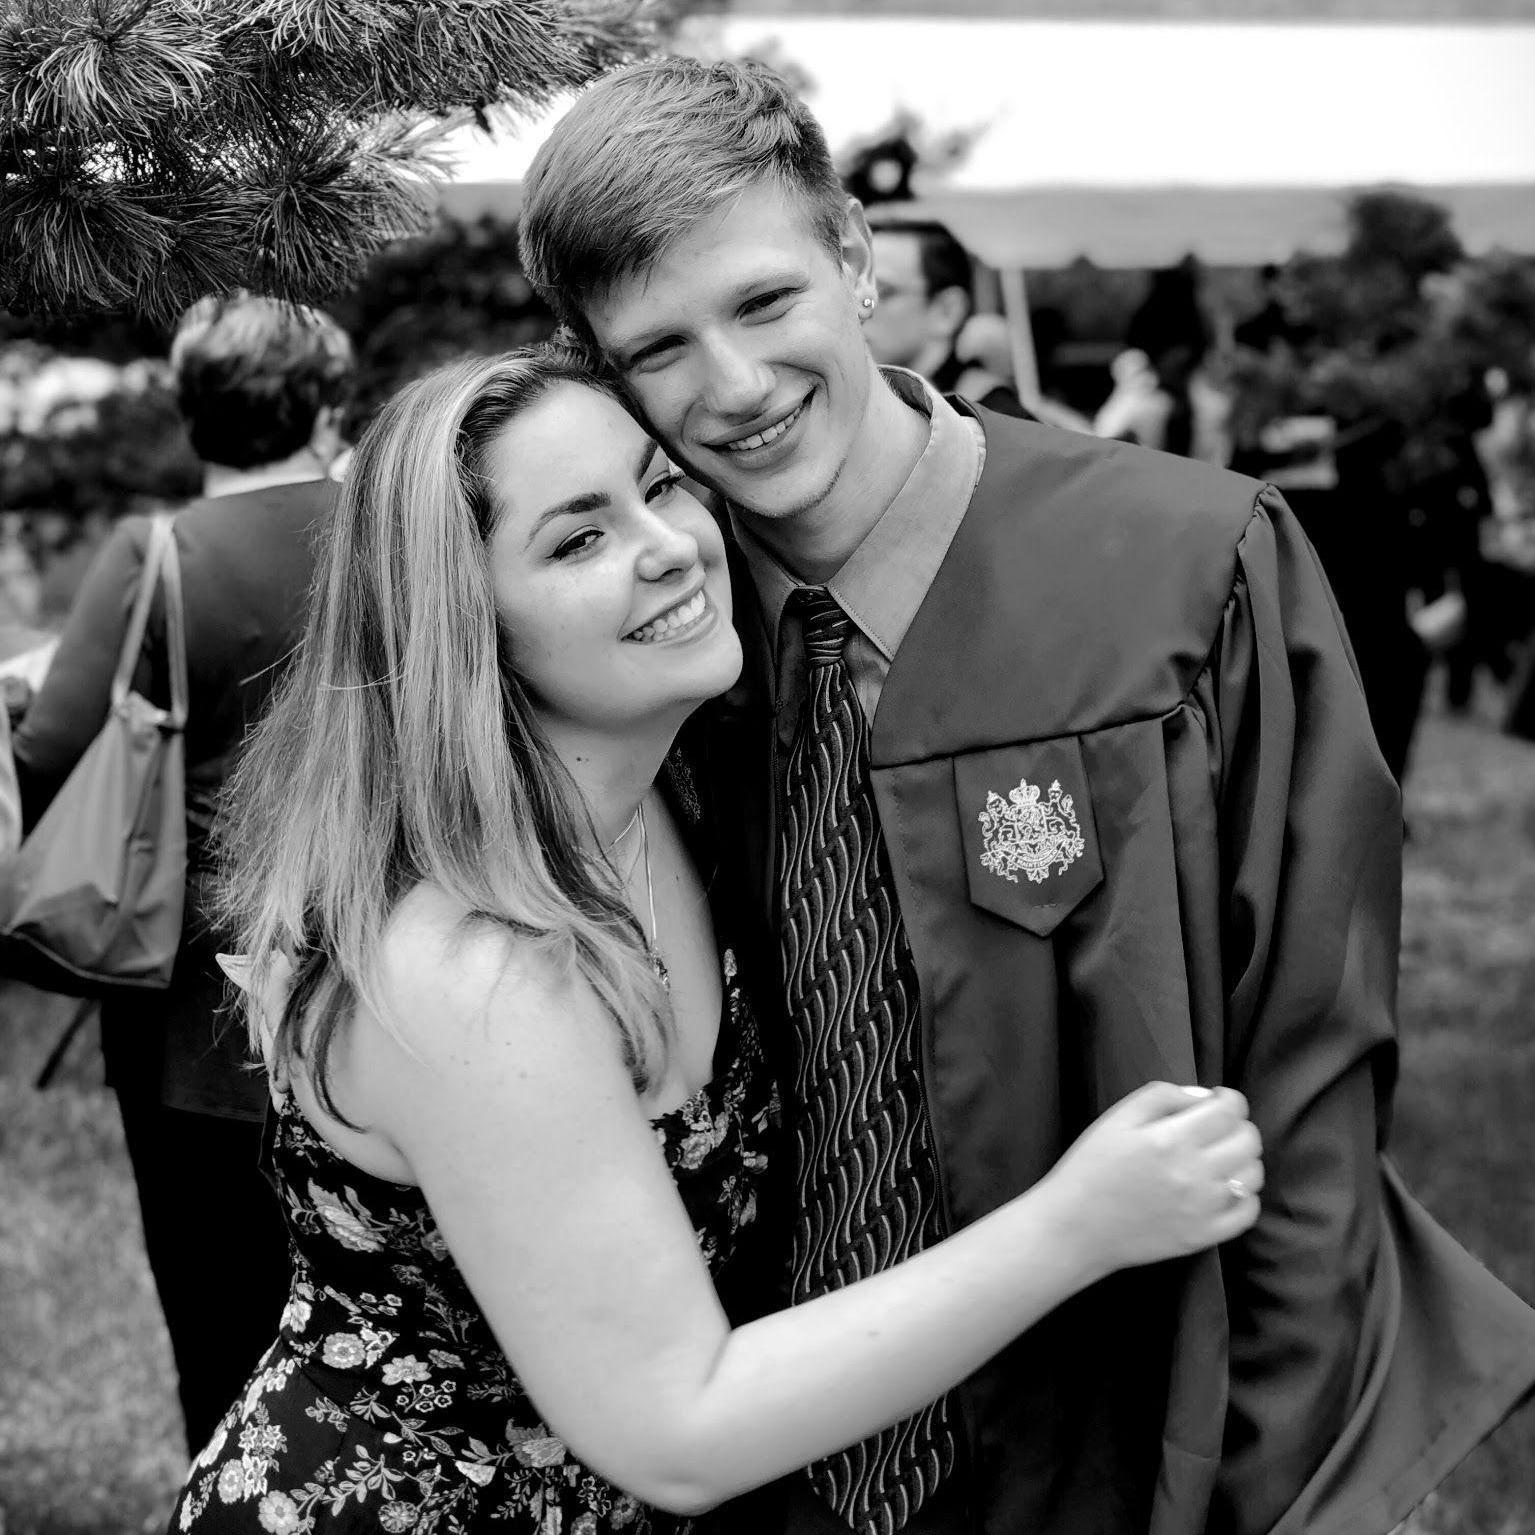 Tom's graduation from Hofstra University | May 2018